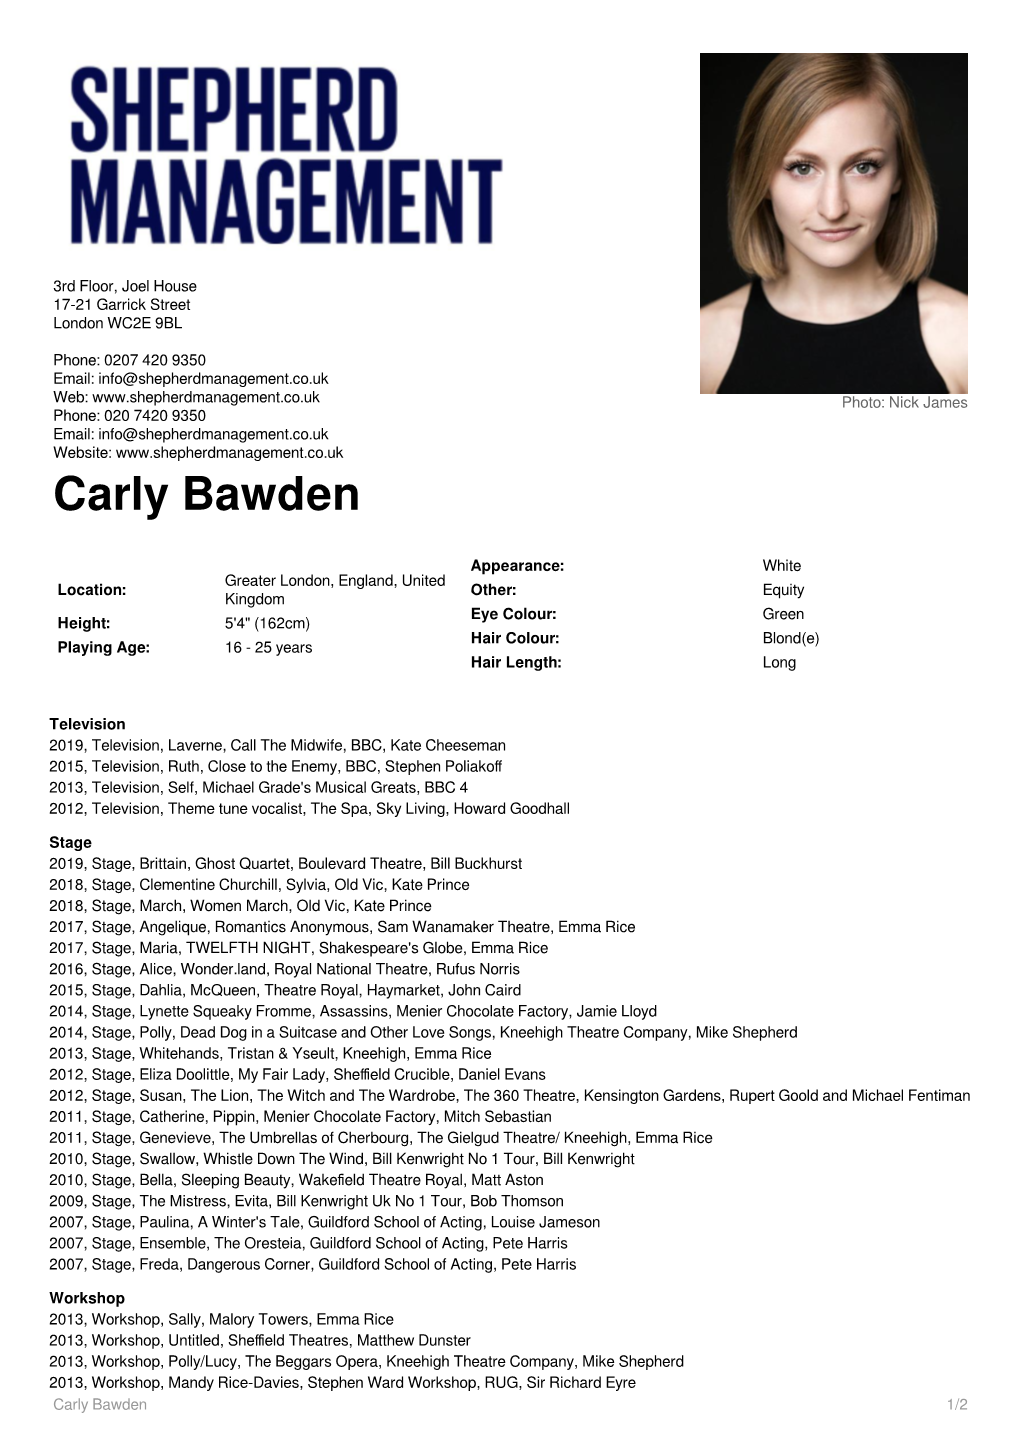 Carly Bawden